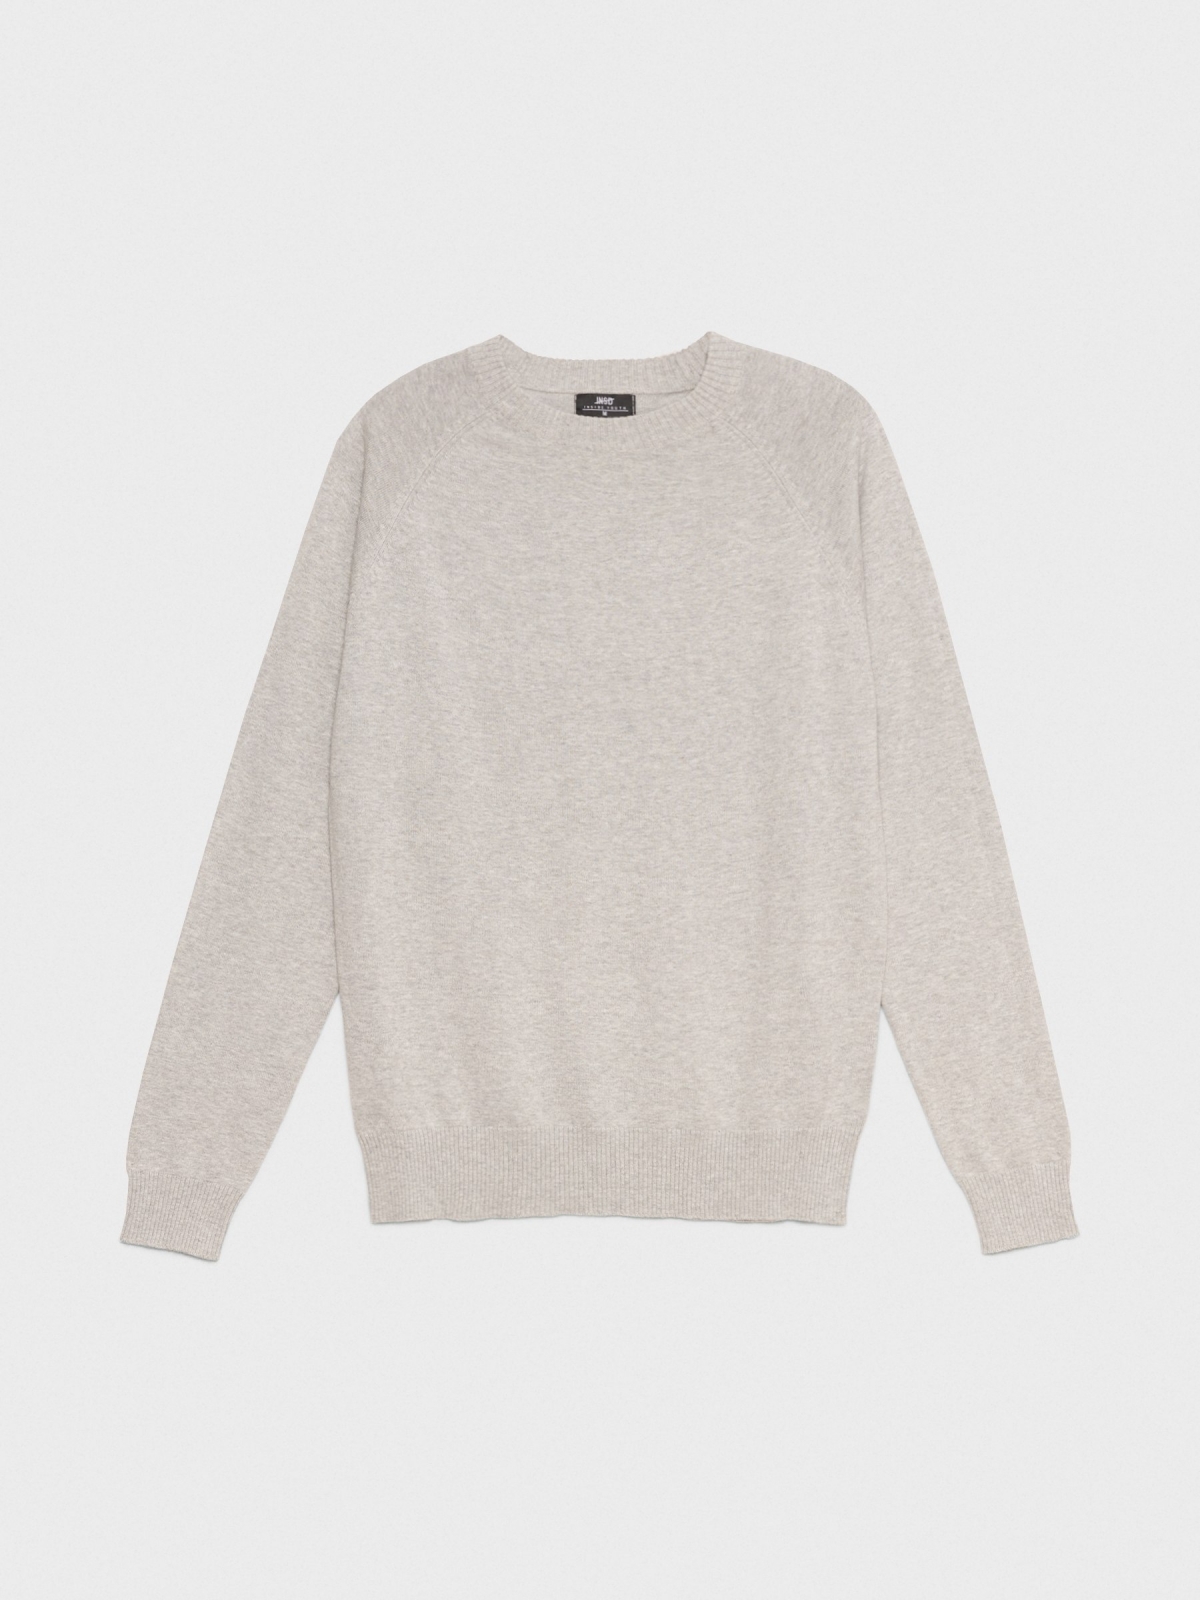  Plain sweater round neck light grey